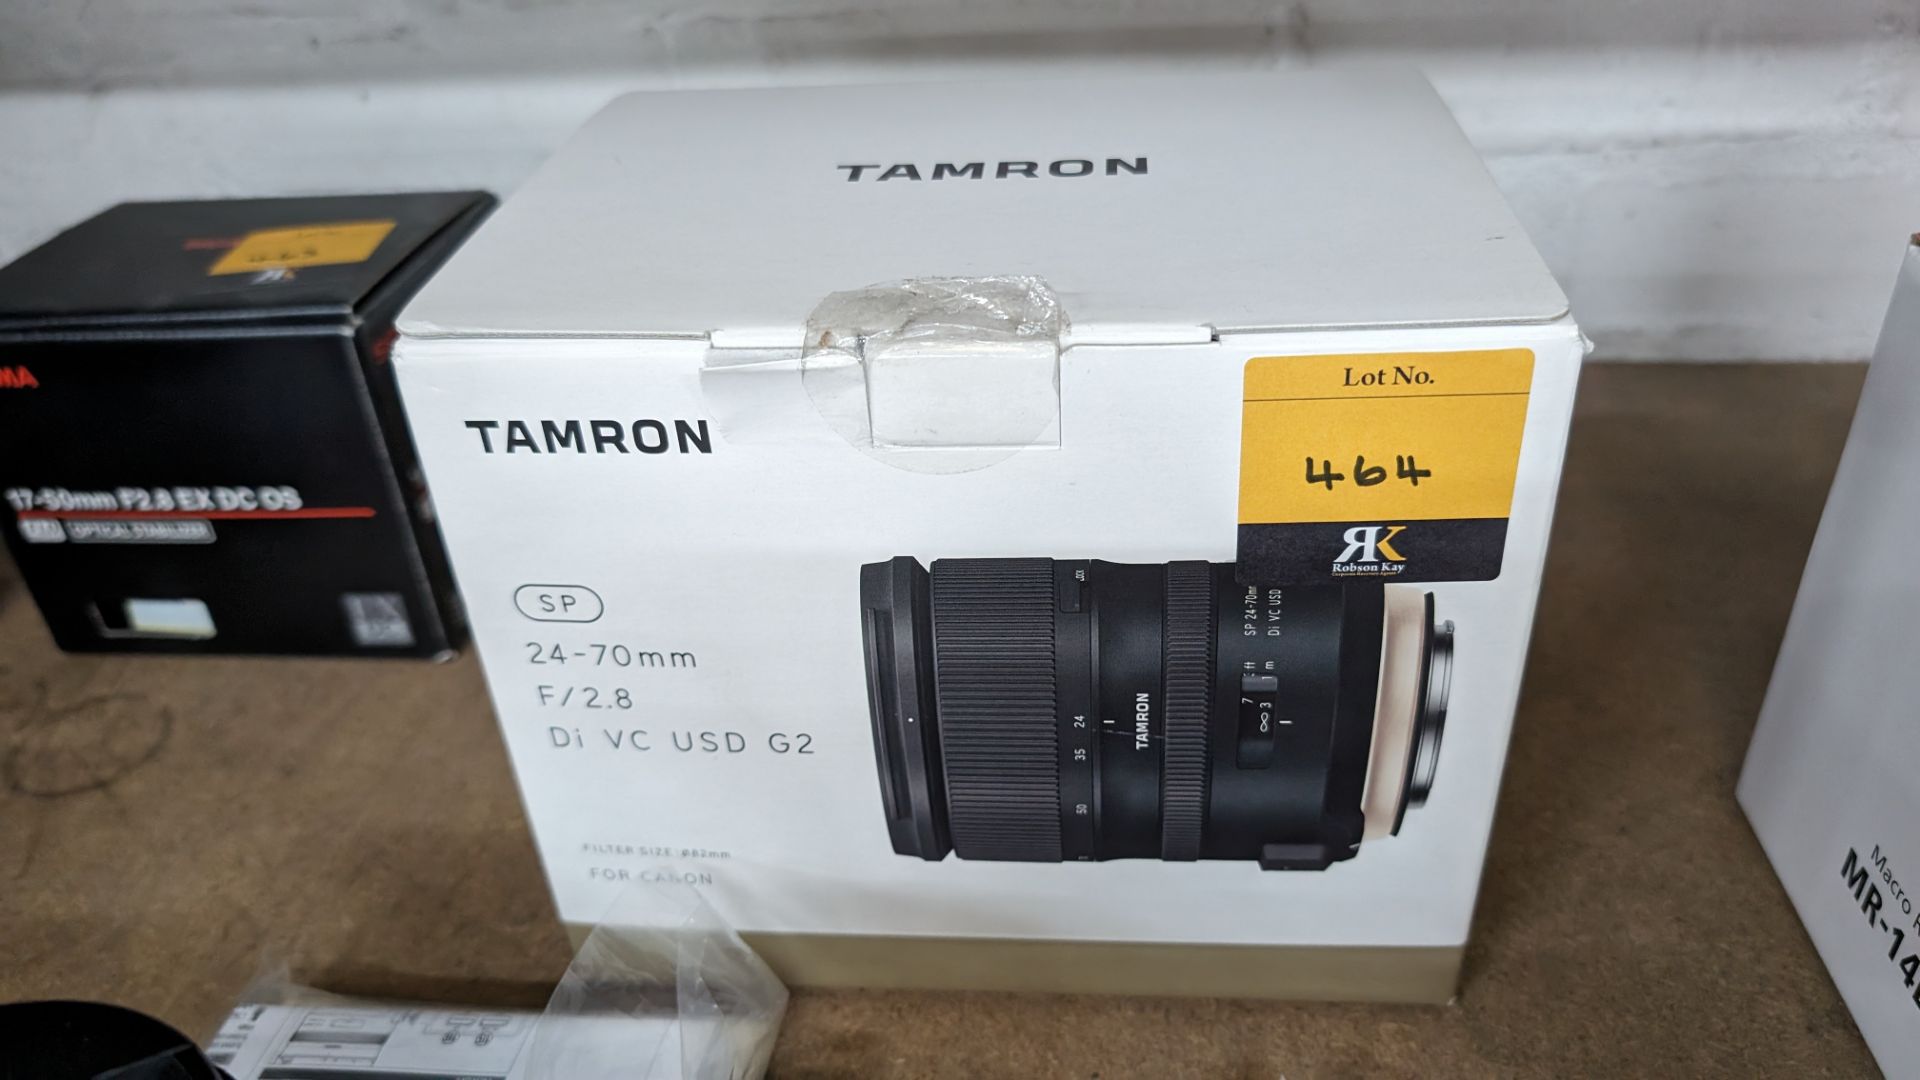 Tamron SP 24-70mm f/2.8 Di VC USD G2 lens, including soft carry case and attachment - Bild 6 aus 10